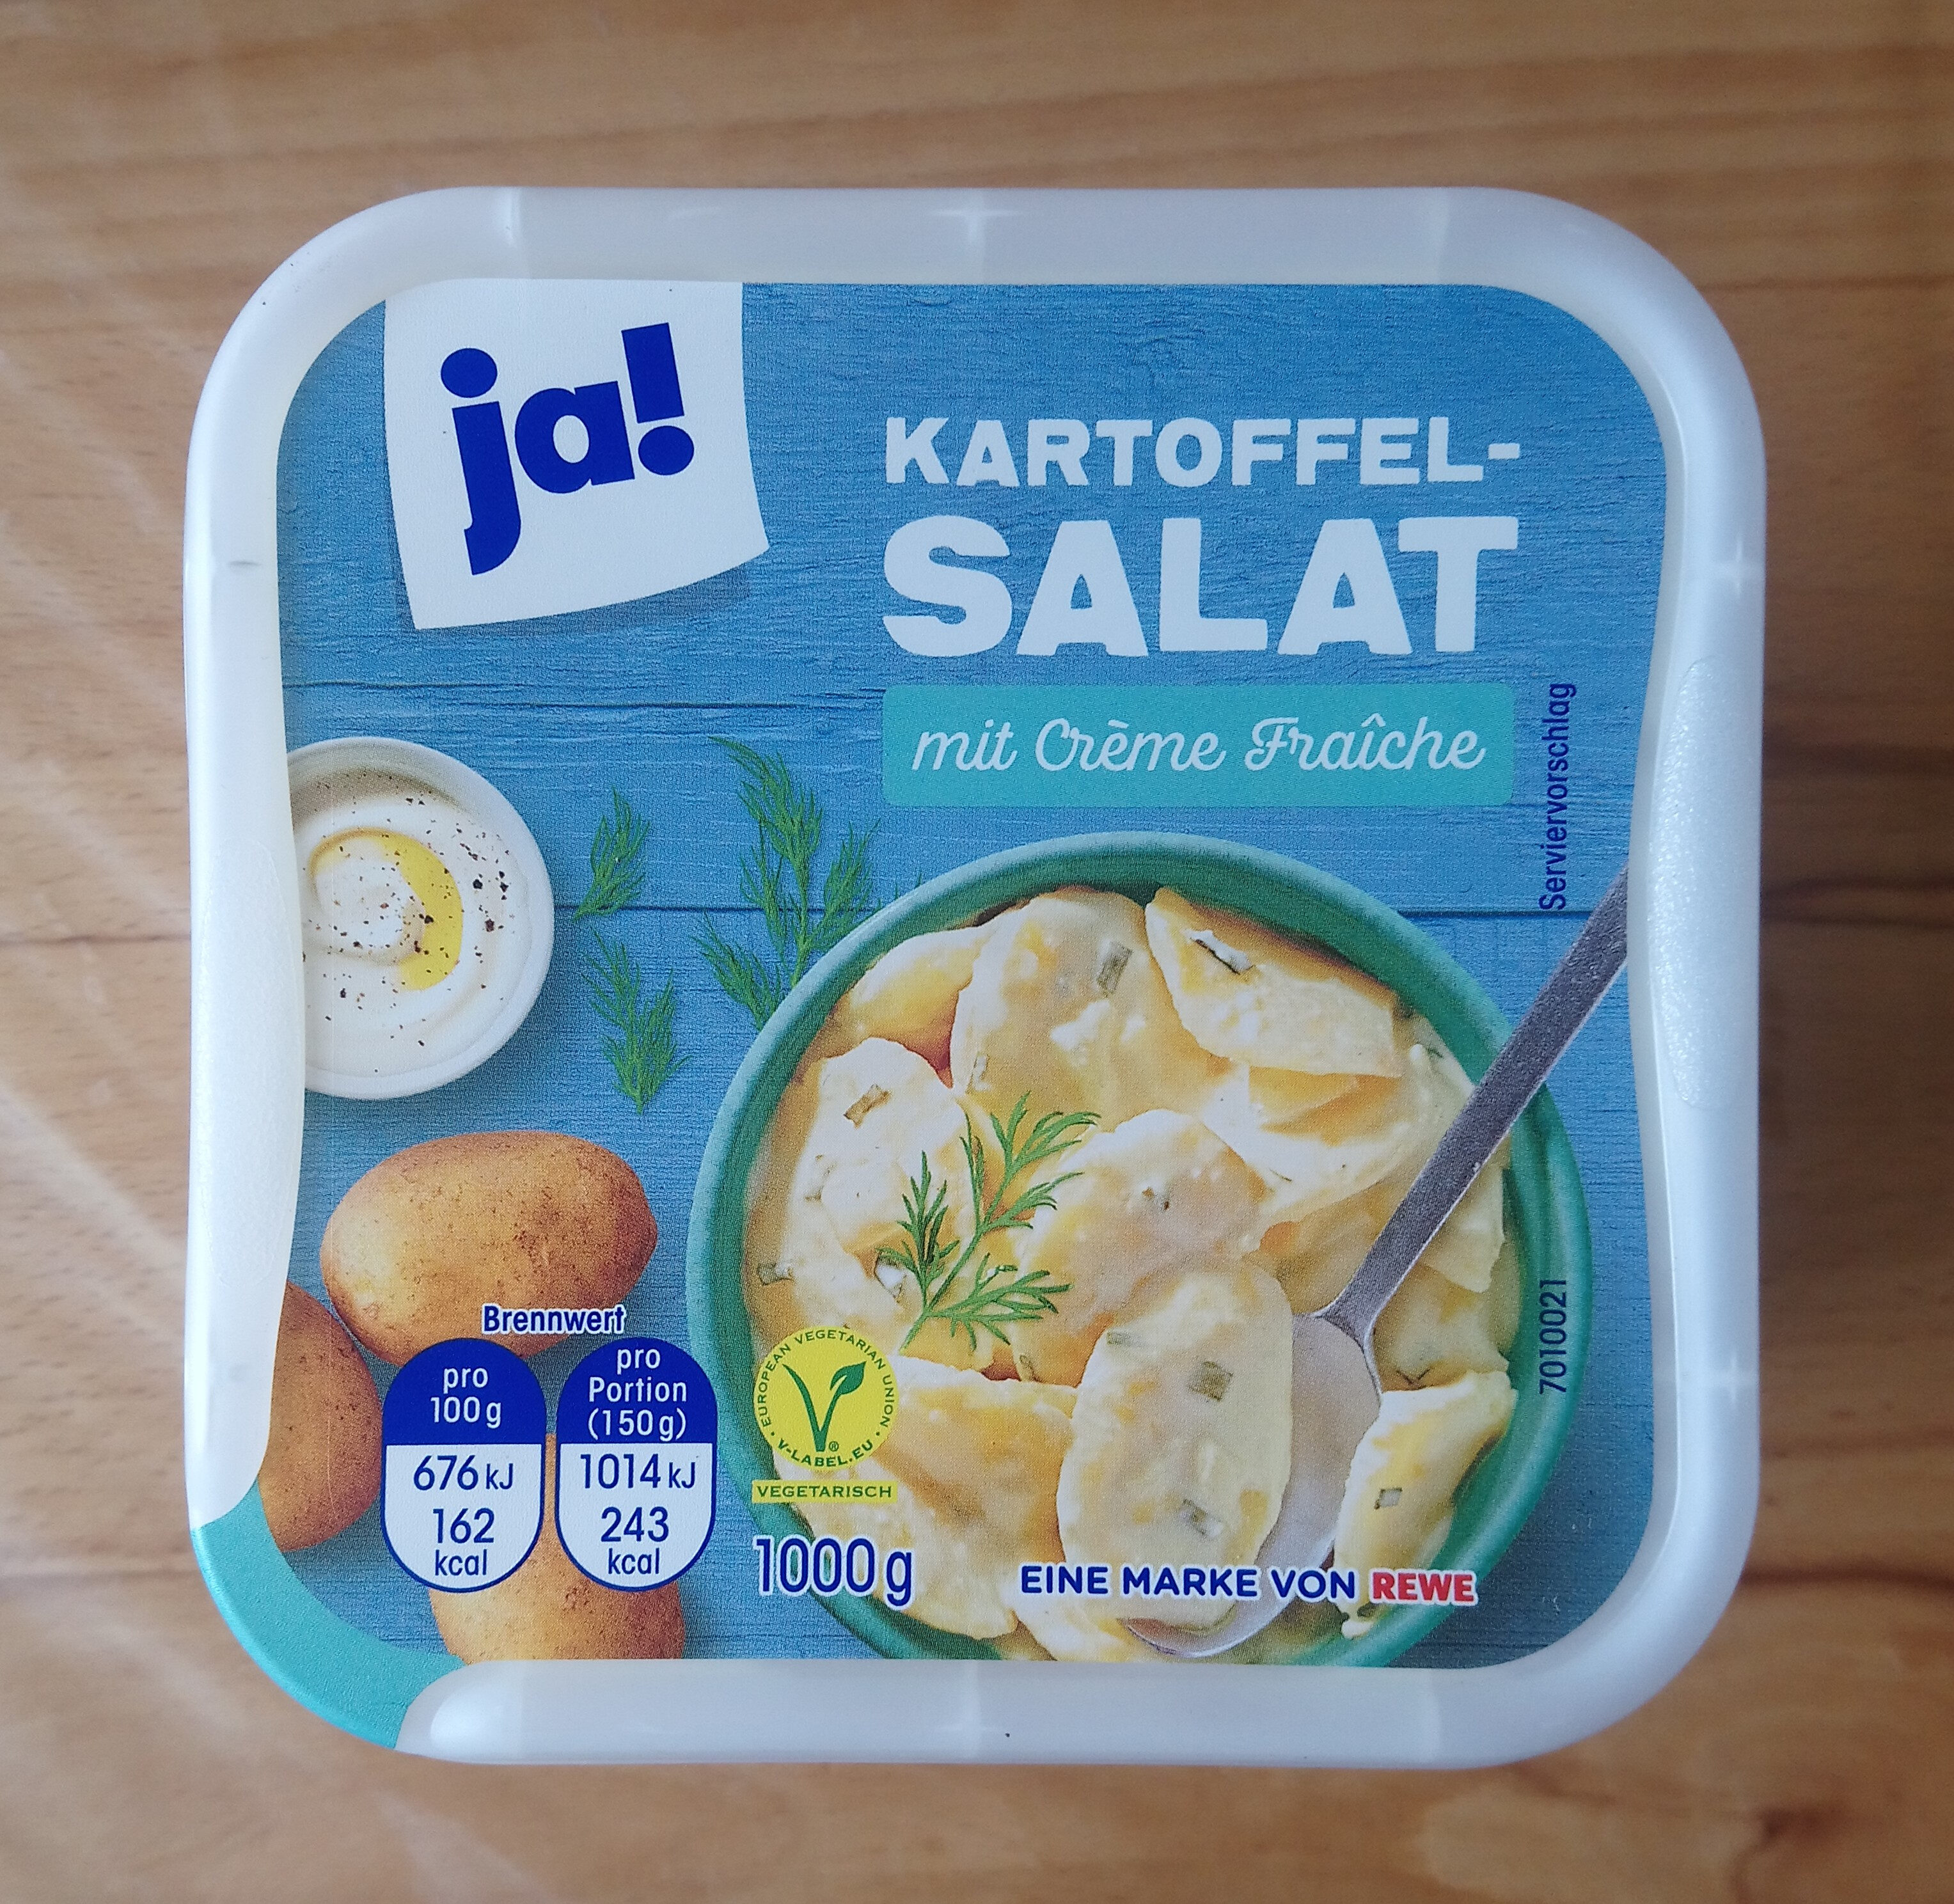 Kartoffelsalat - Product - de